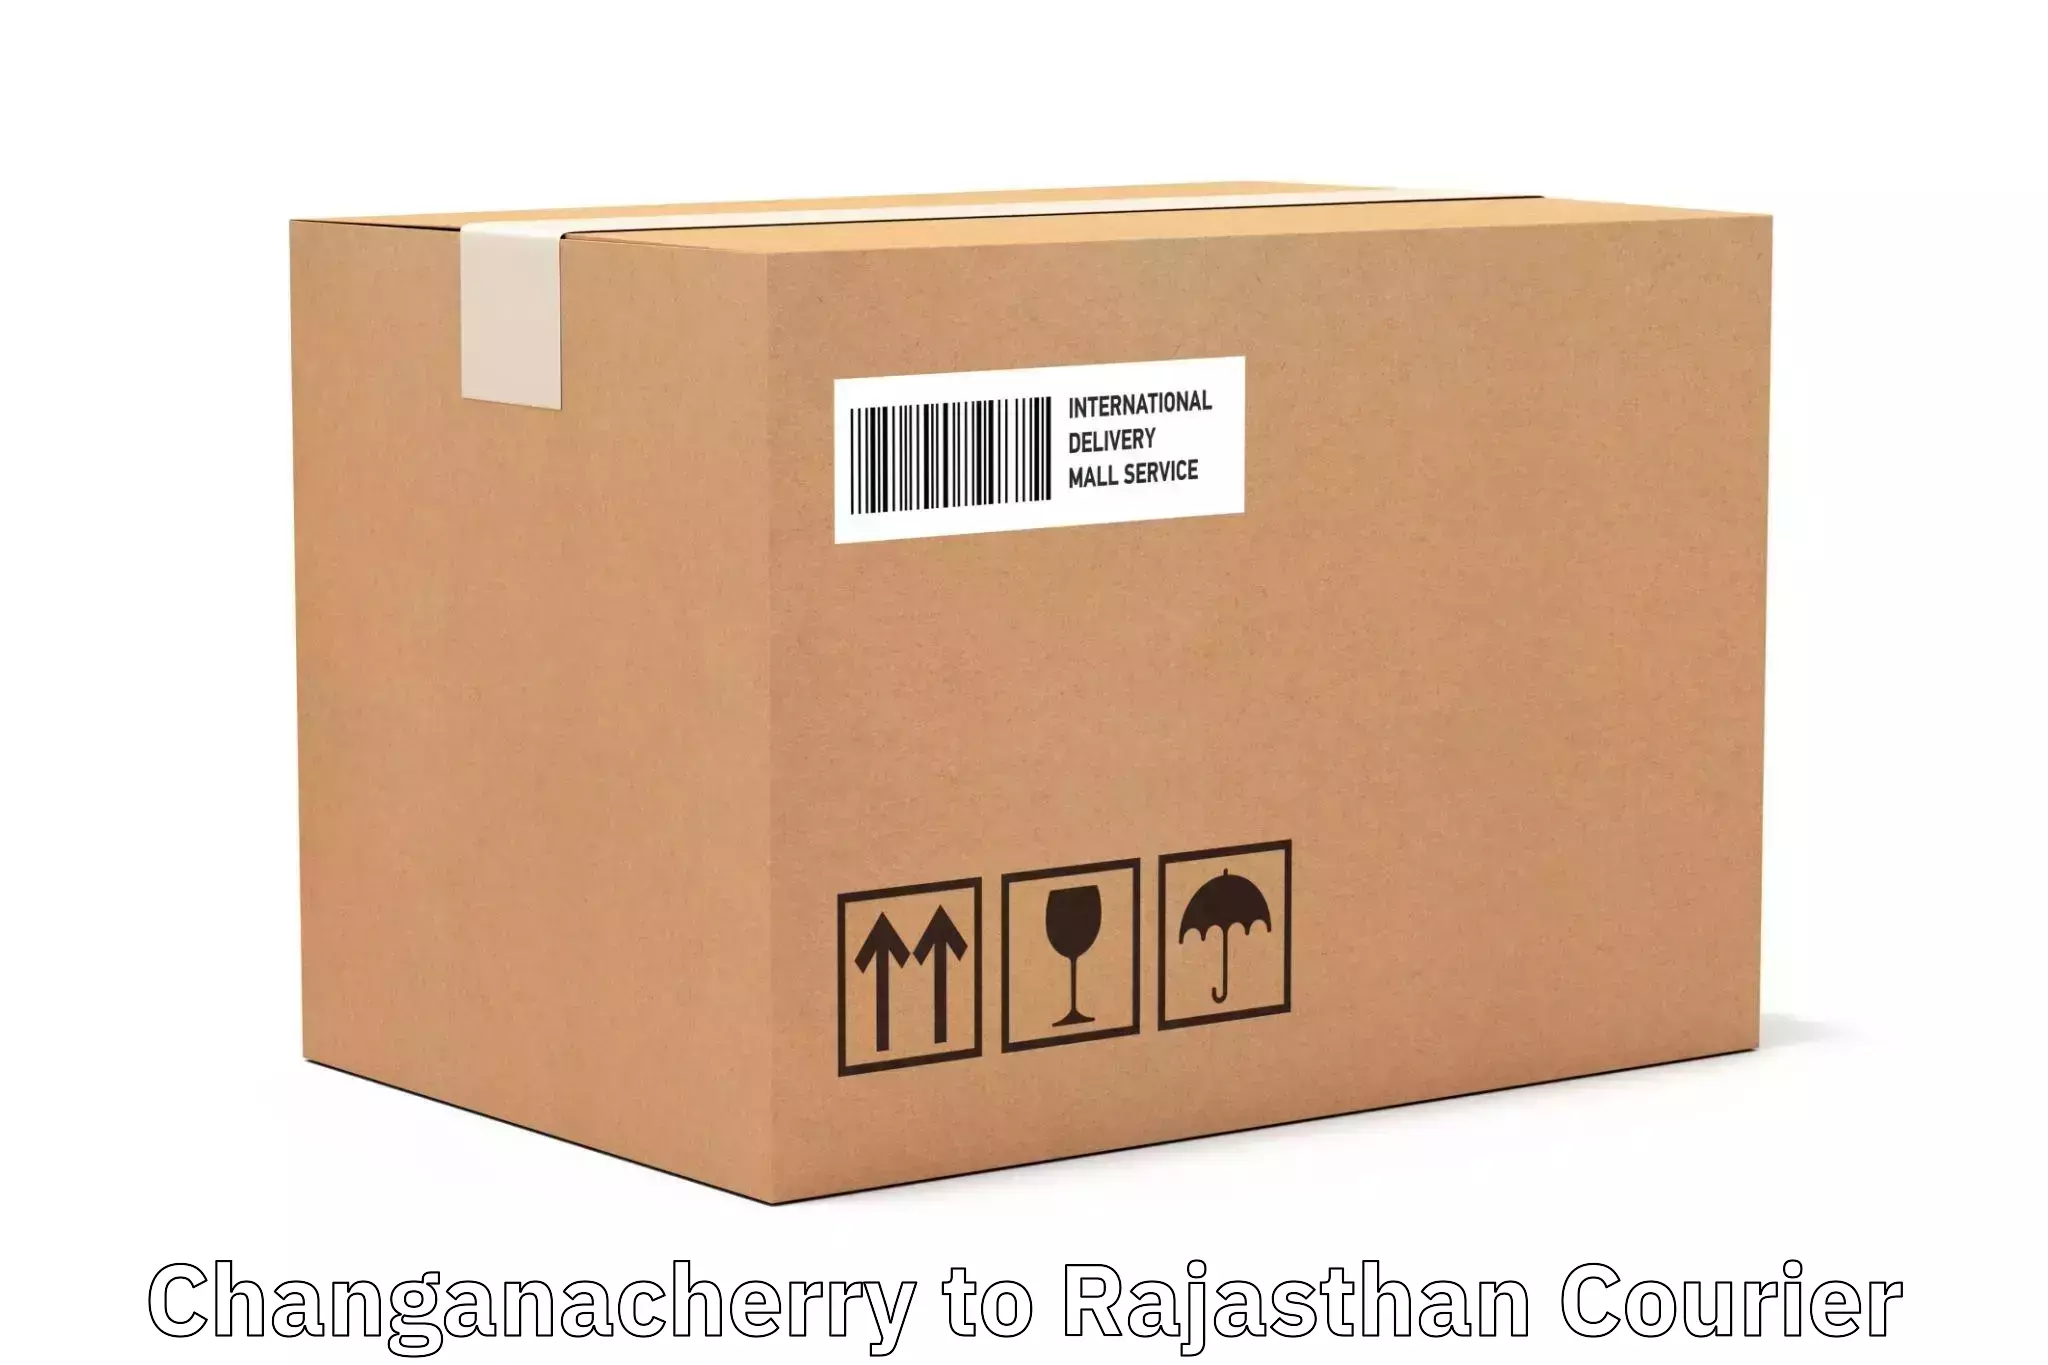 Package delivery network Changanacherry to Gogunda